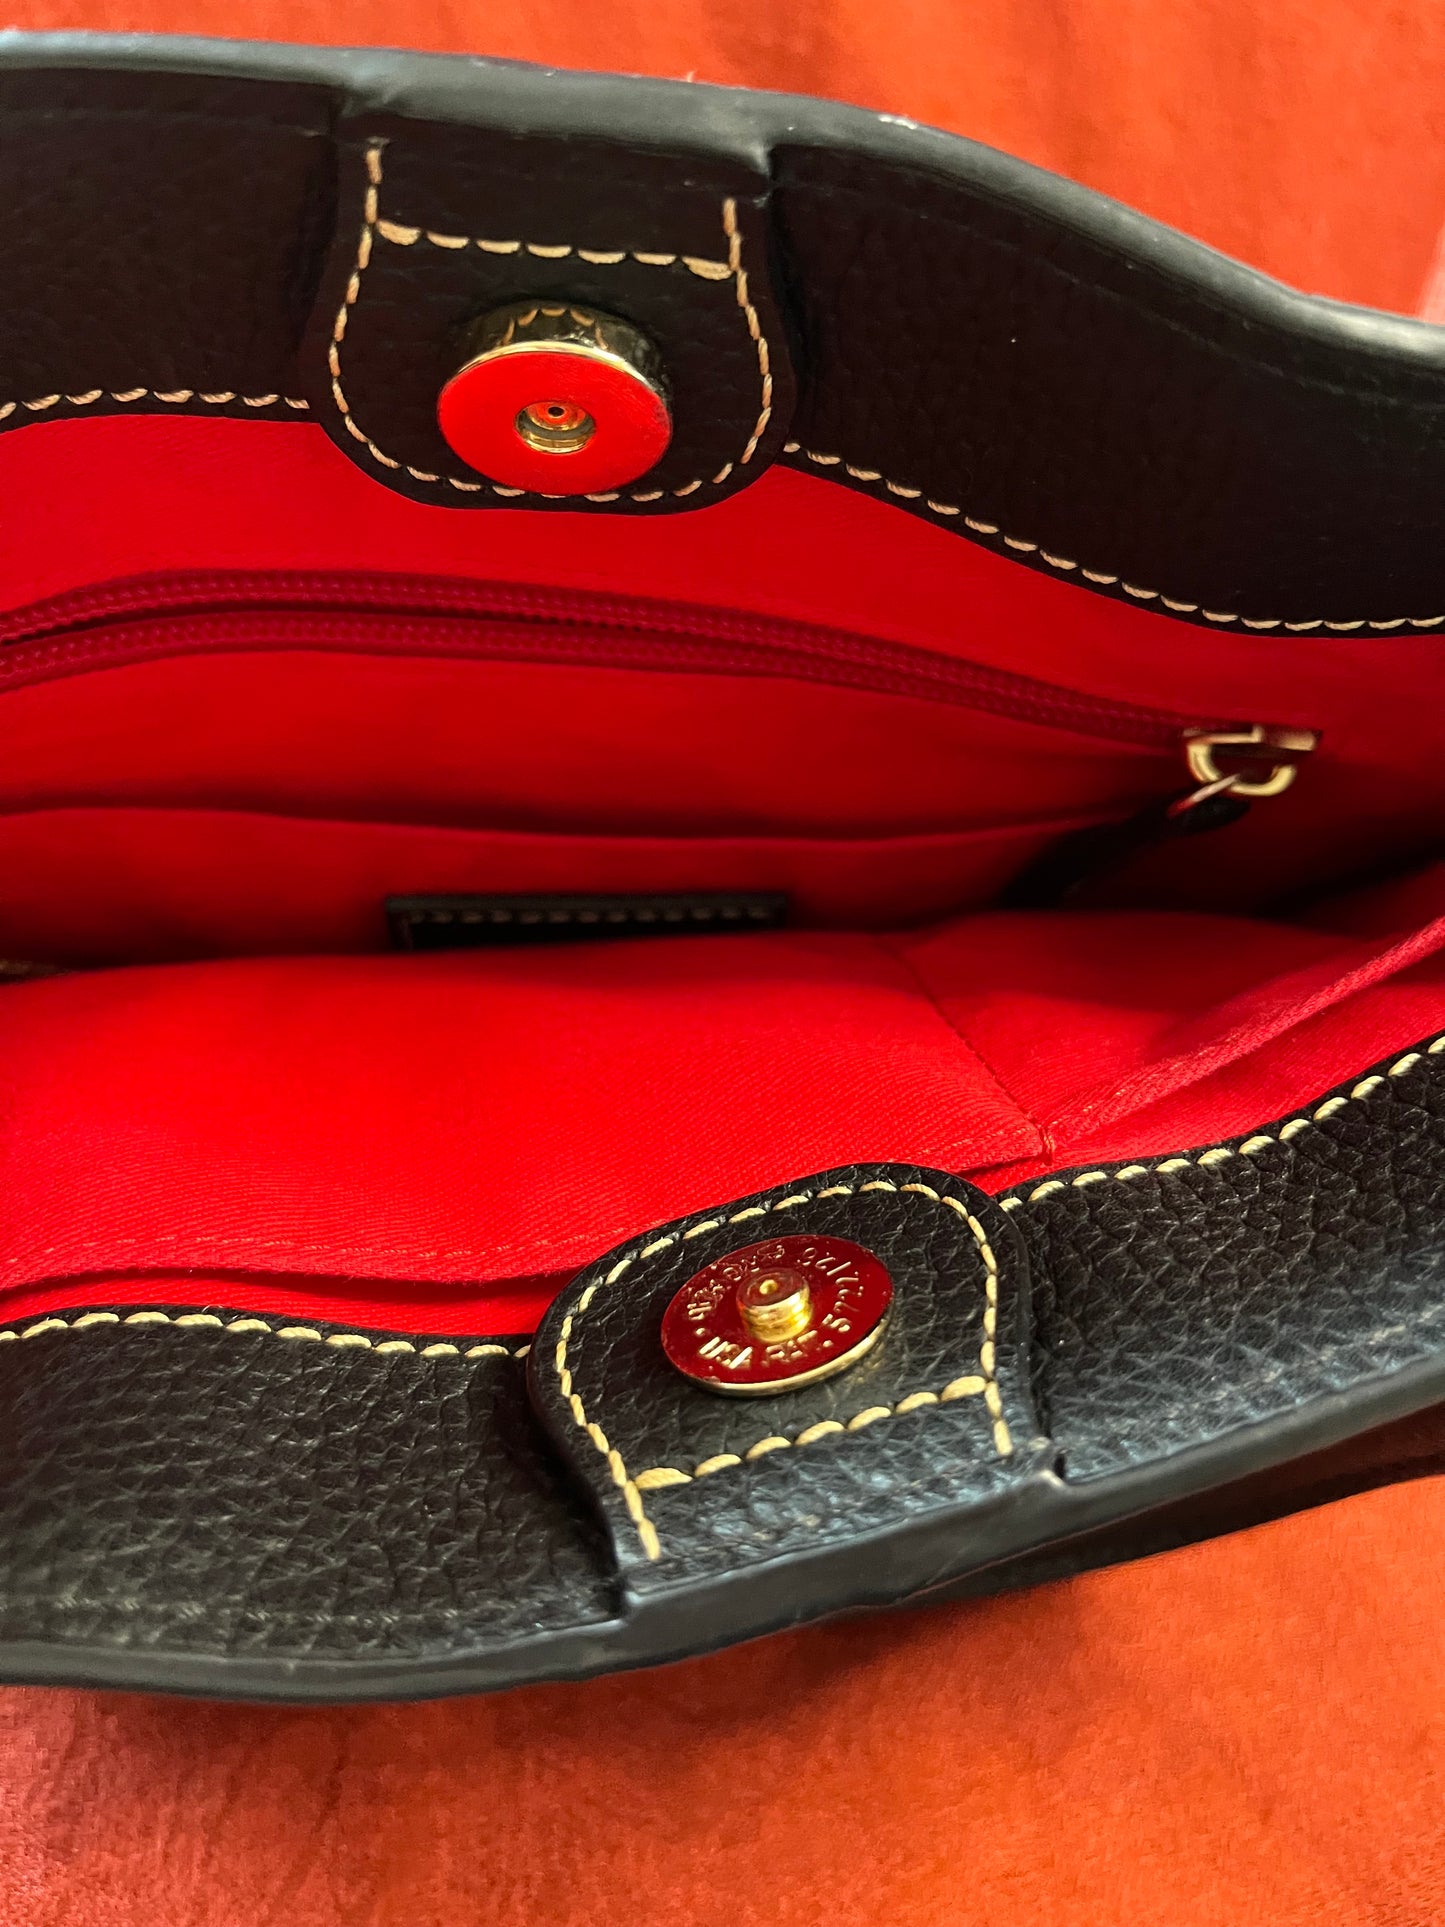 Dooney & Bourke Lexi Saffiano Leather Small Crossbody Bag Purse Handbag  Black